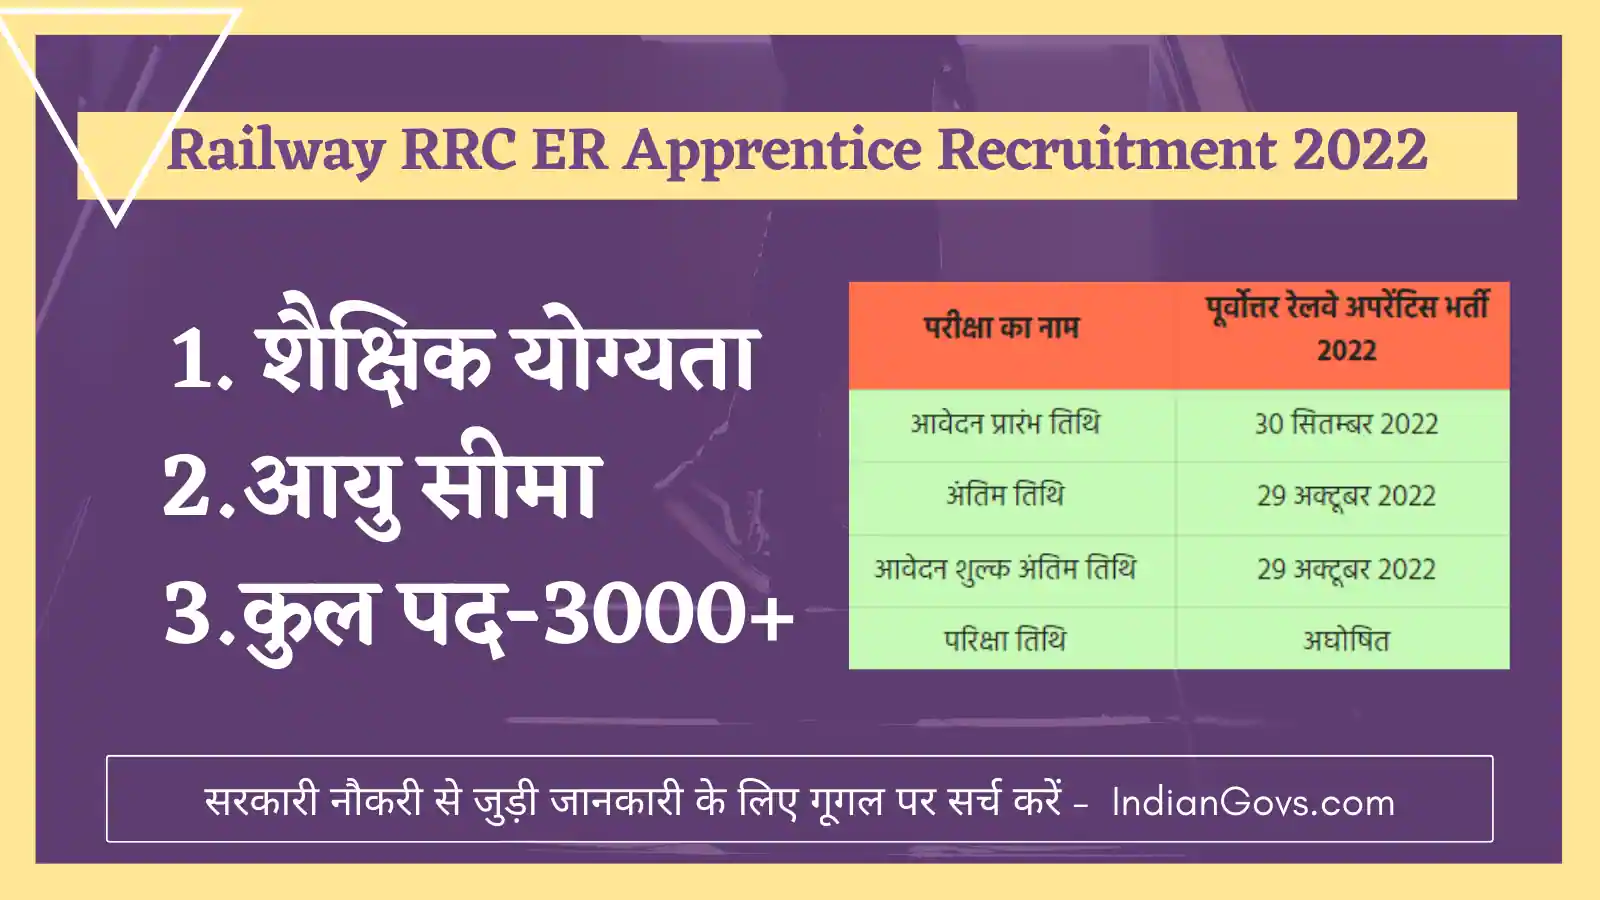 Railway RRC ER Apprentice Recruitment 2022